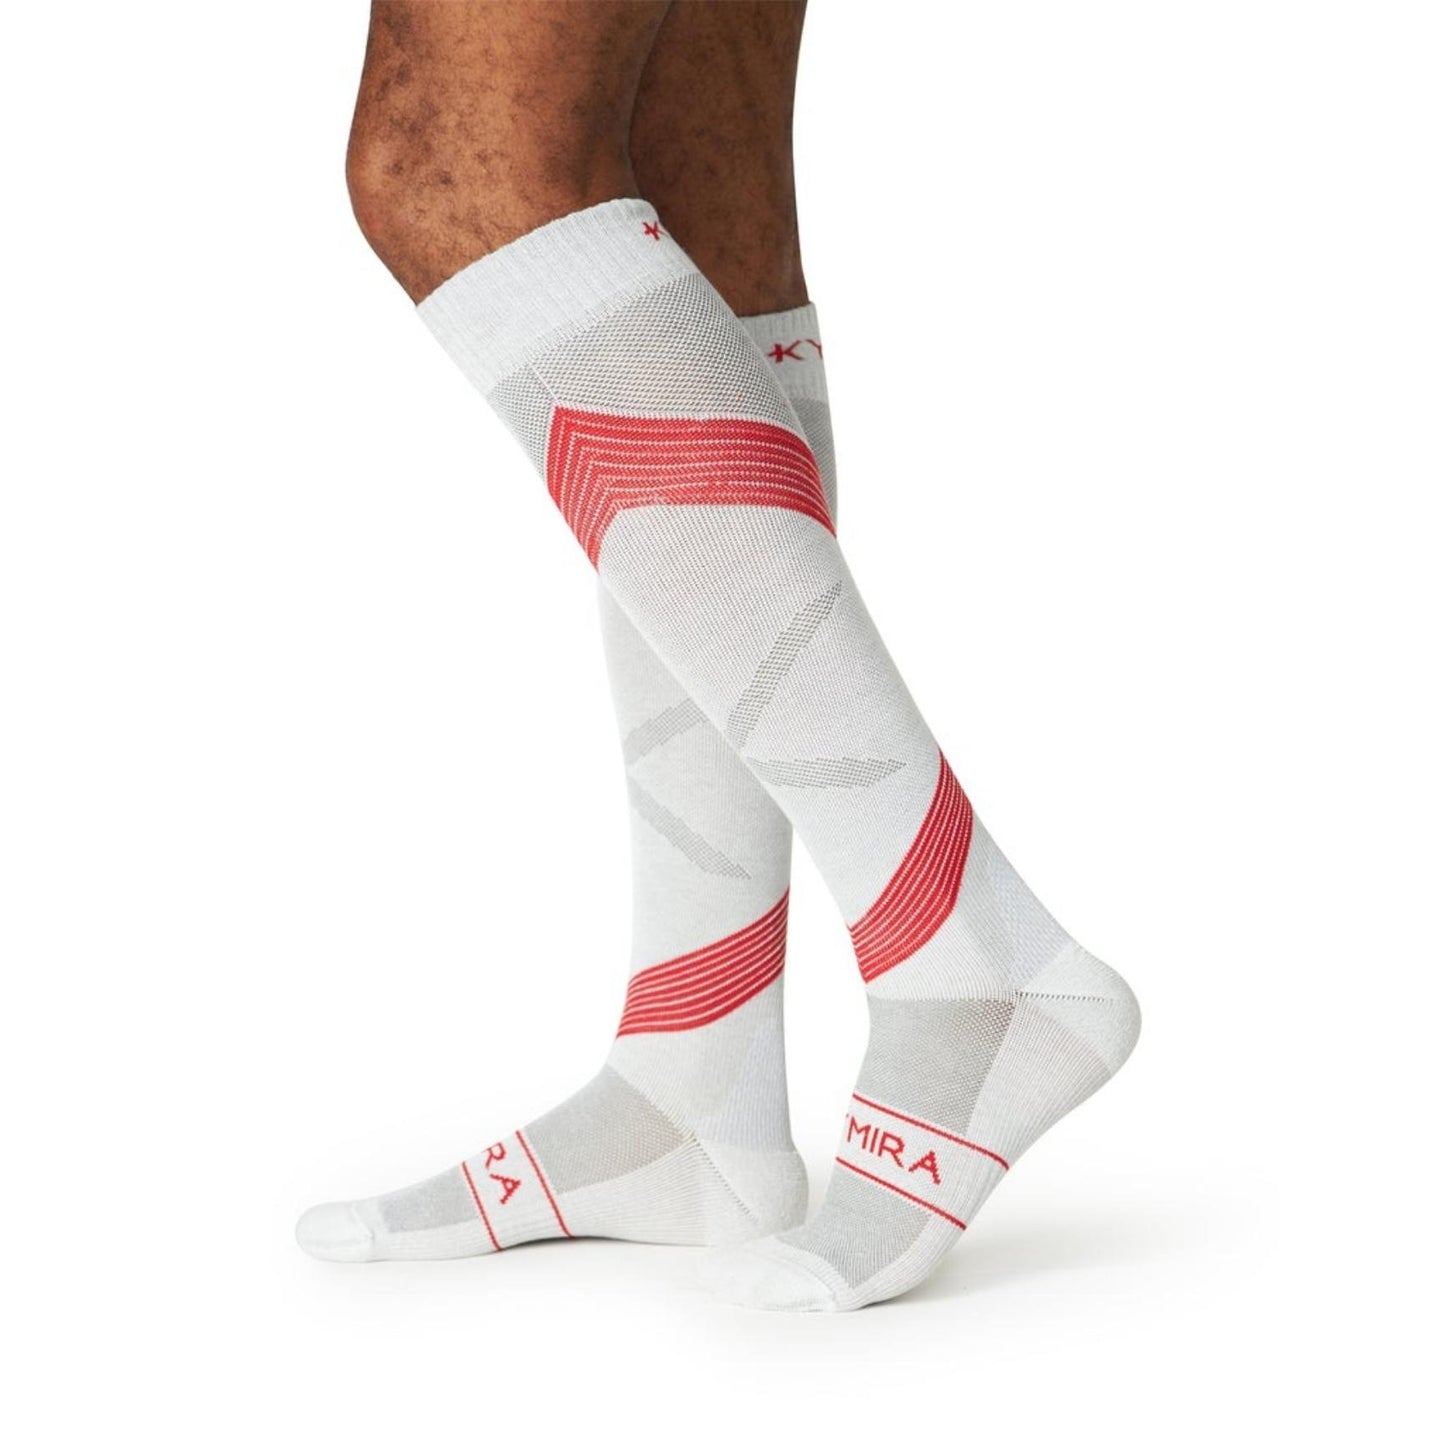 KYMIRA Infrared Compression Socks - White/Red